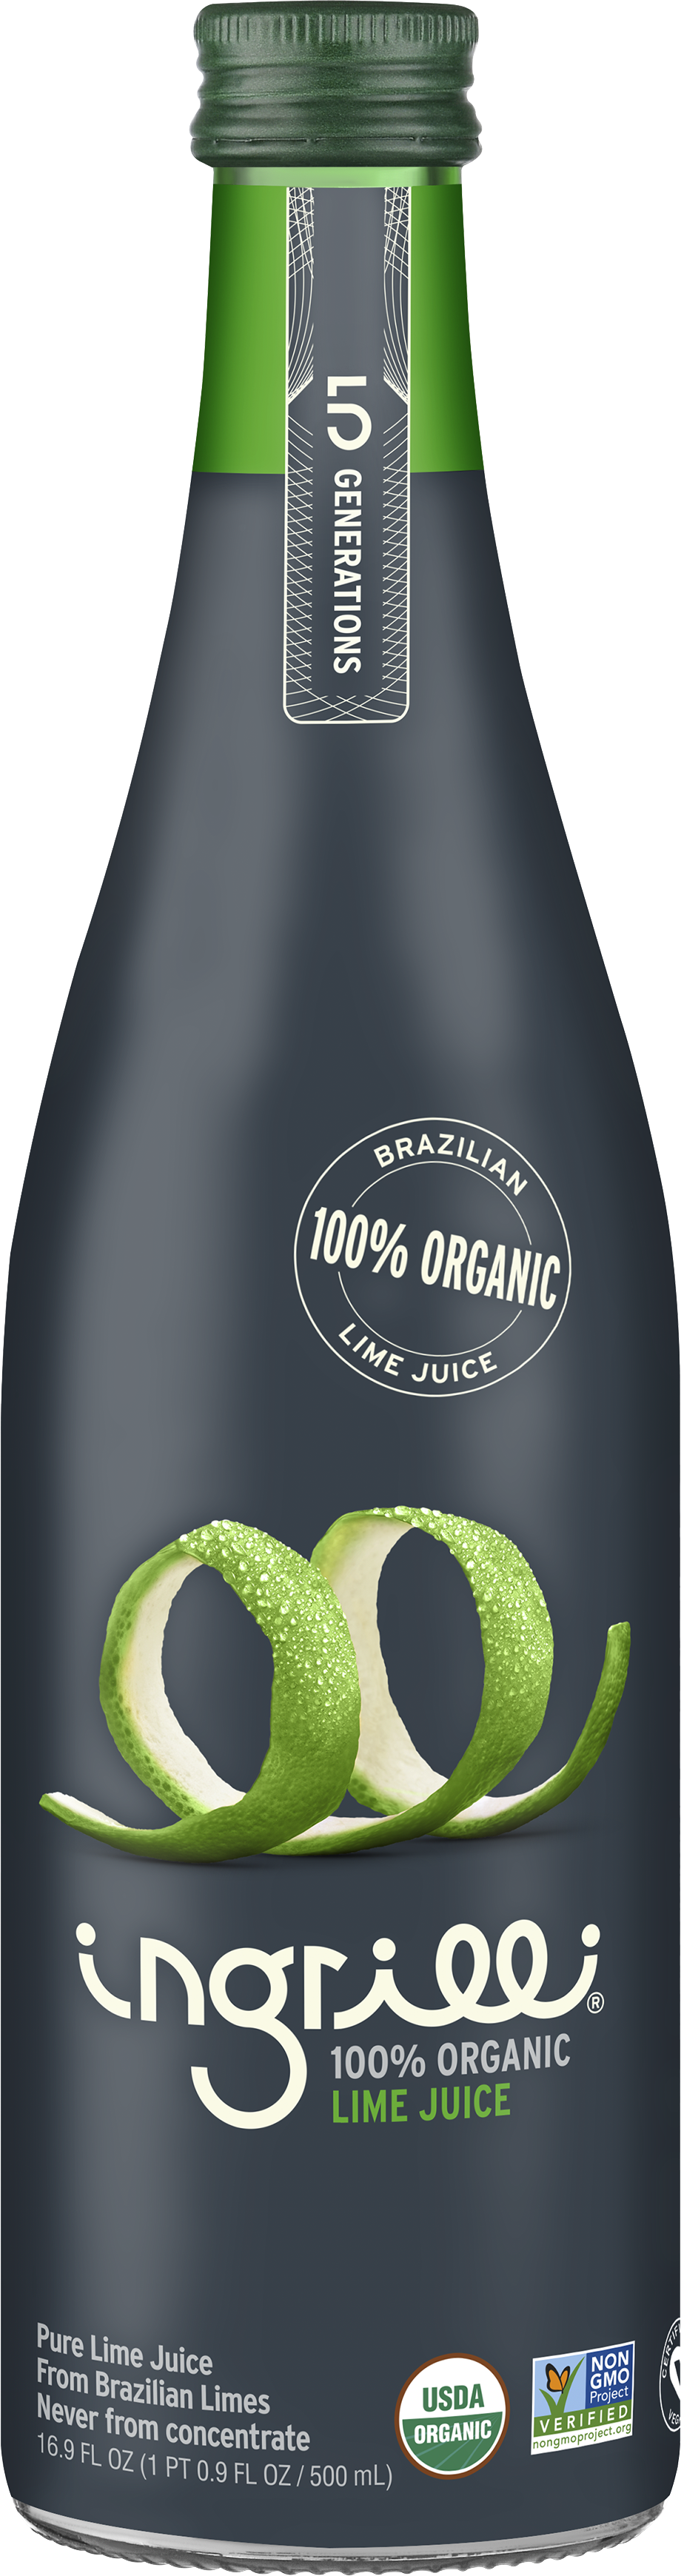 Ingrilli 100% Organic Lime Juice, 16.9 Fl Oz Glass Bottle - Multi Pack